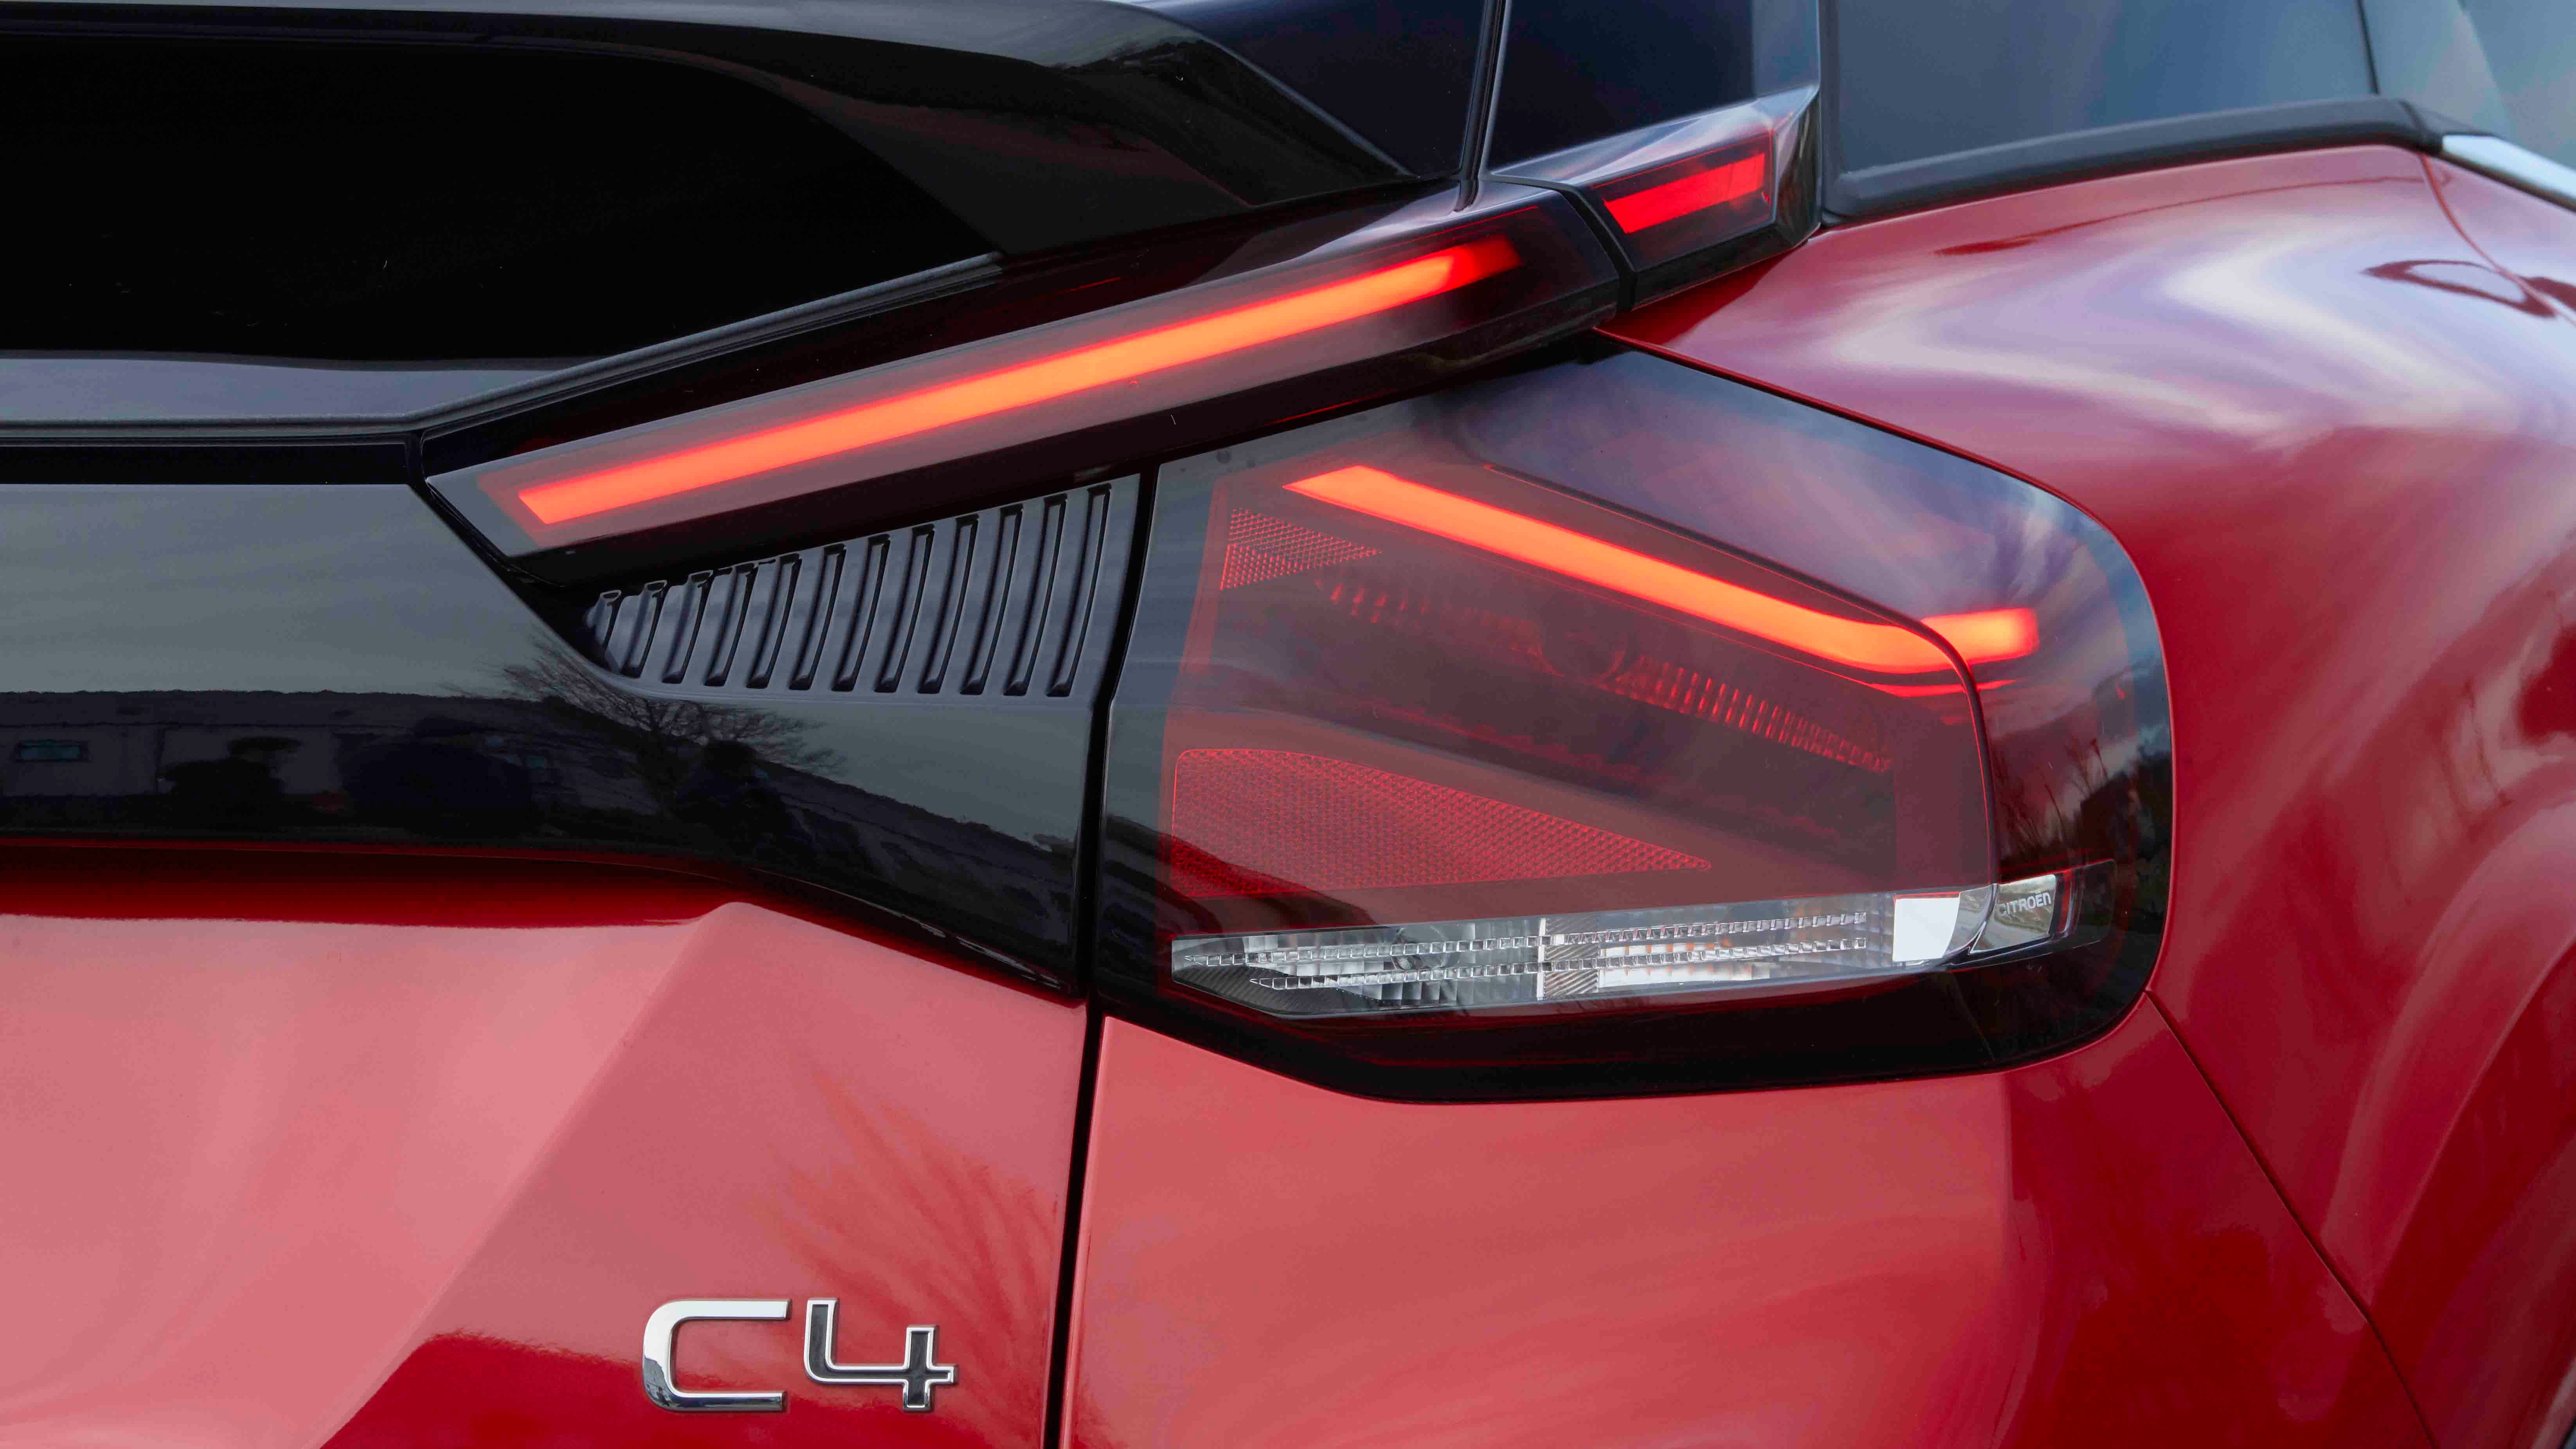 Citroen C4 tail-light